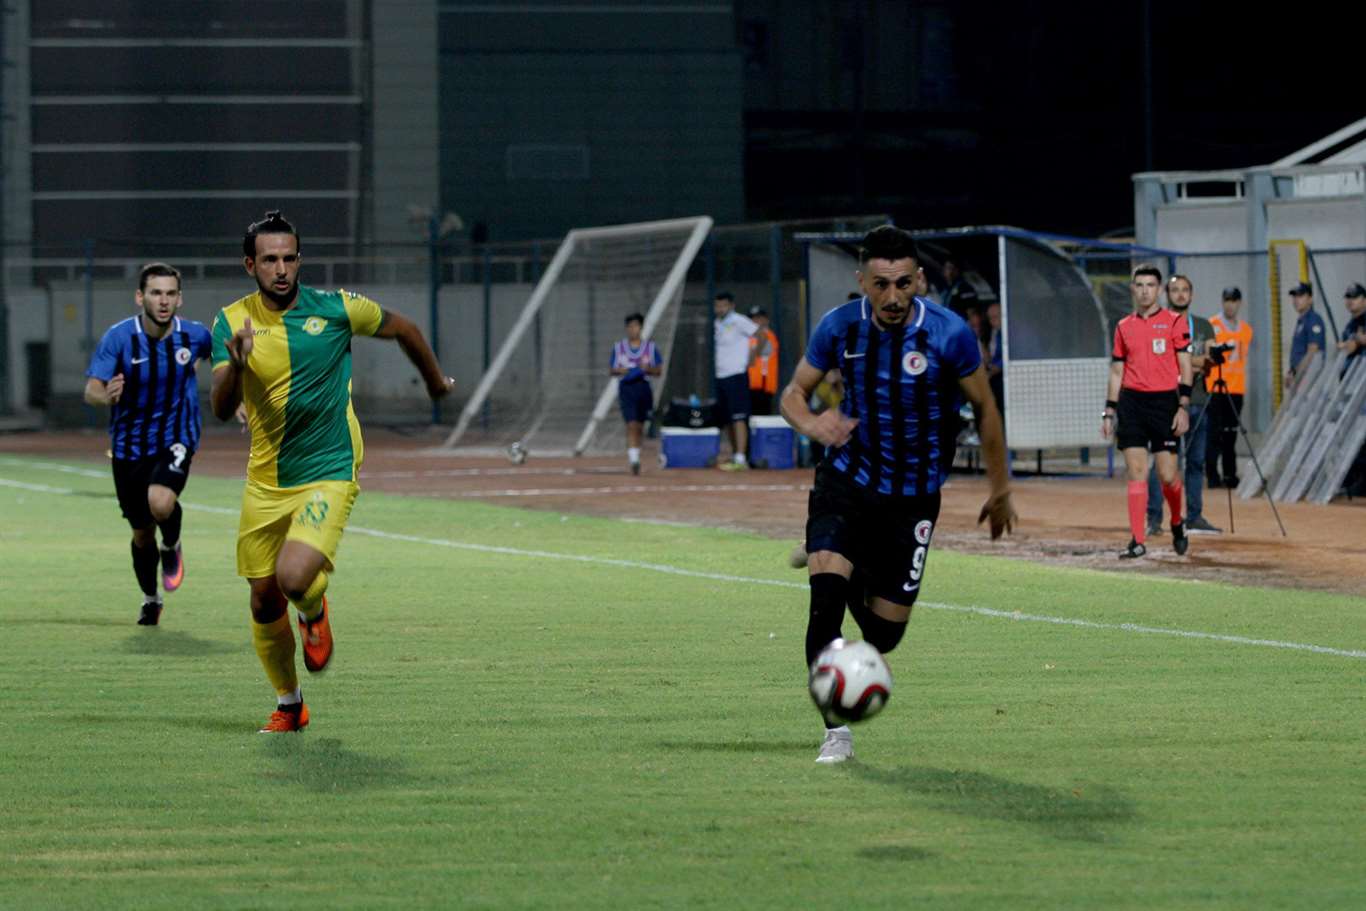       Fethiyespor, Erokspor'U 3-0 mağlup etti haberi